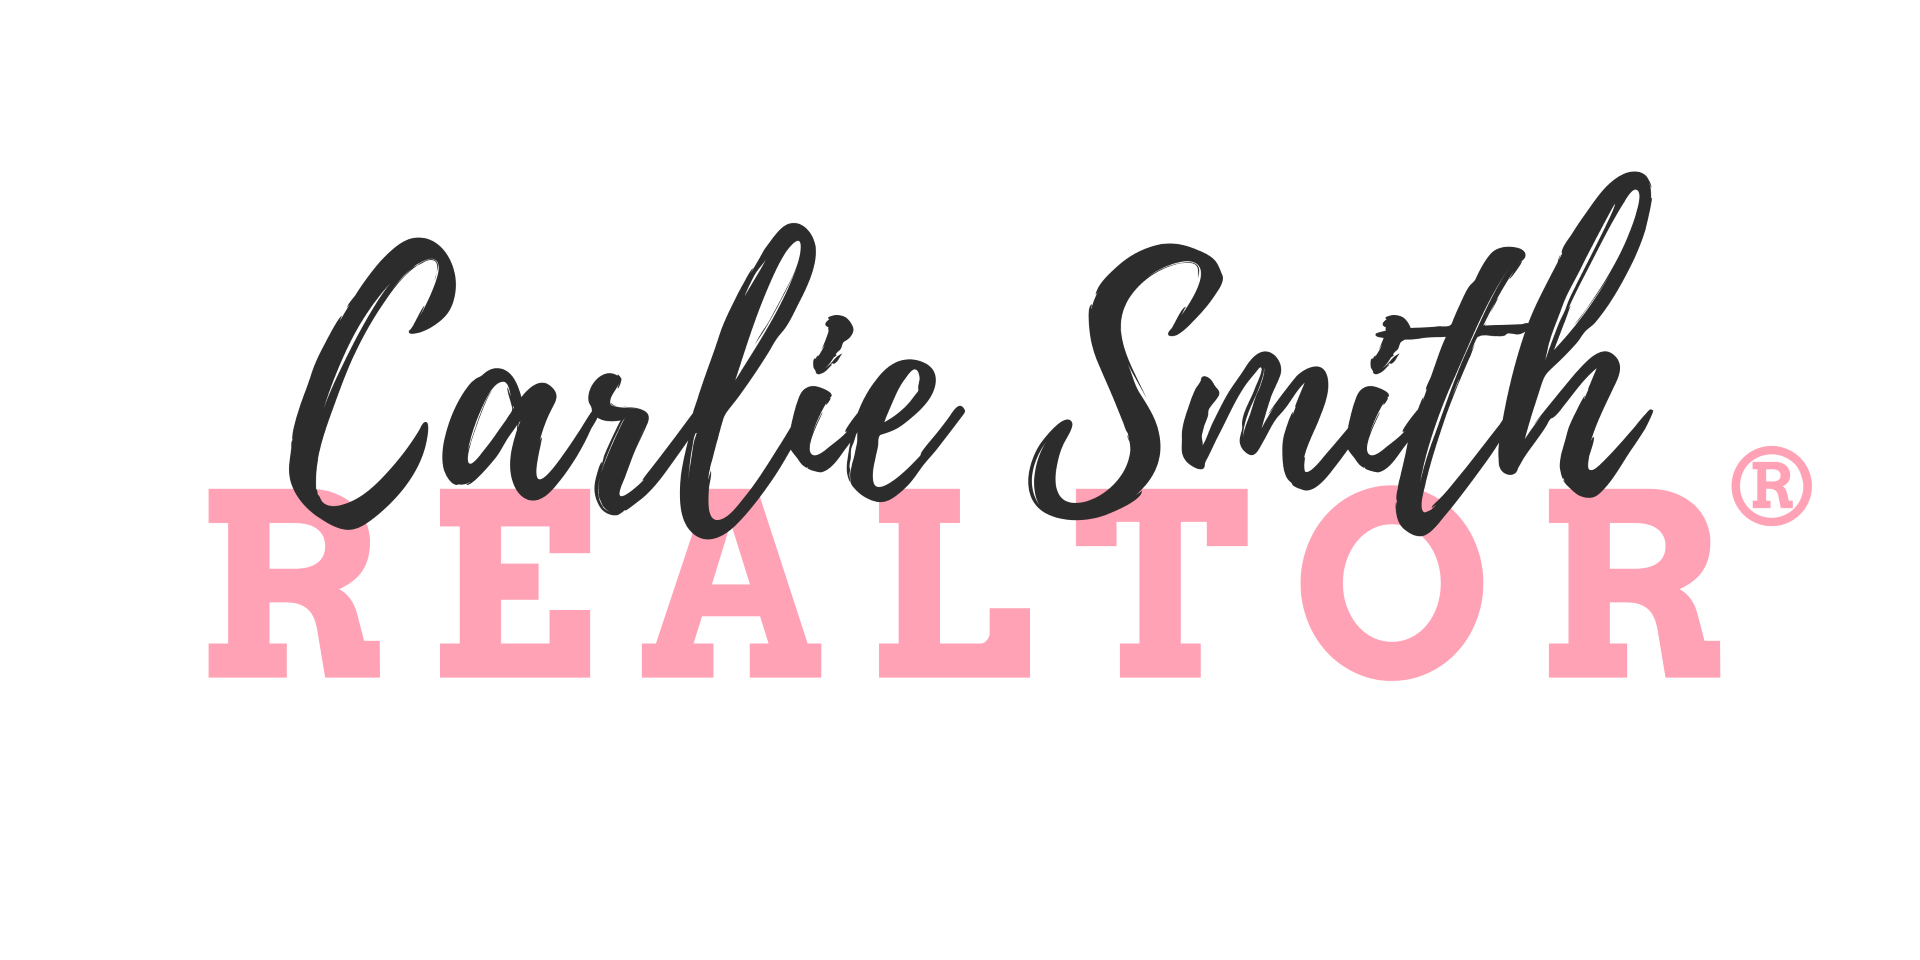 CARLIE SMITH REALTOR